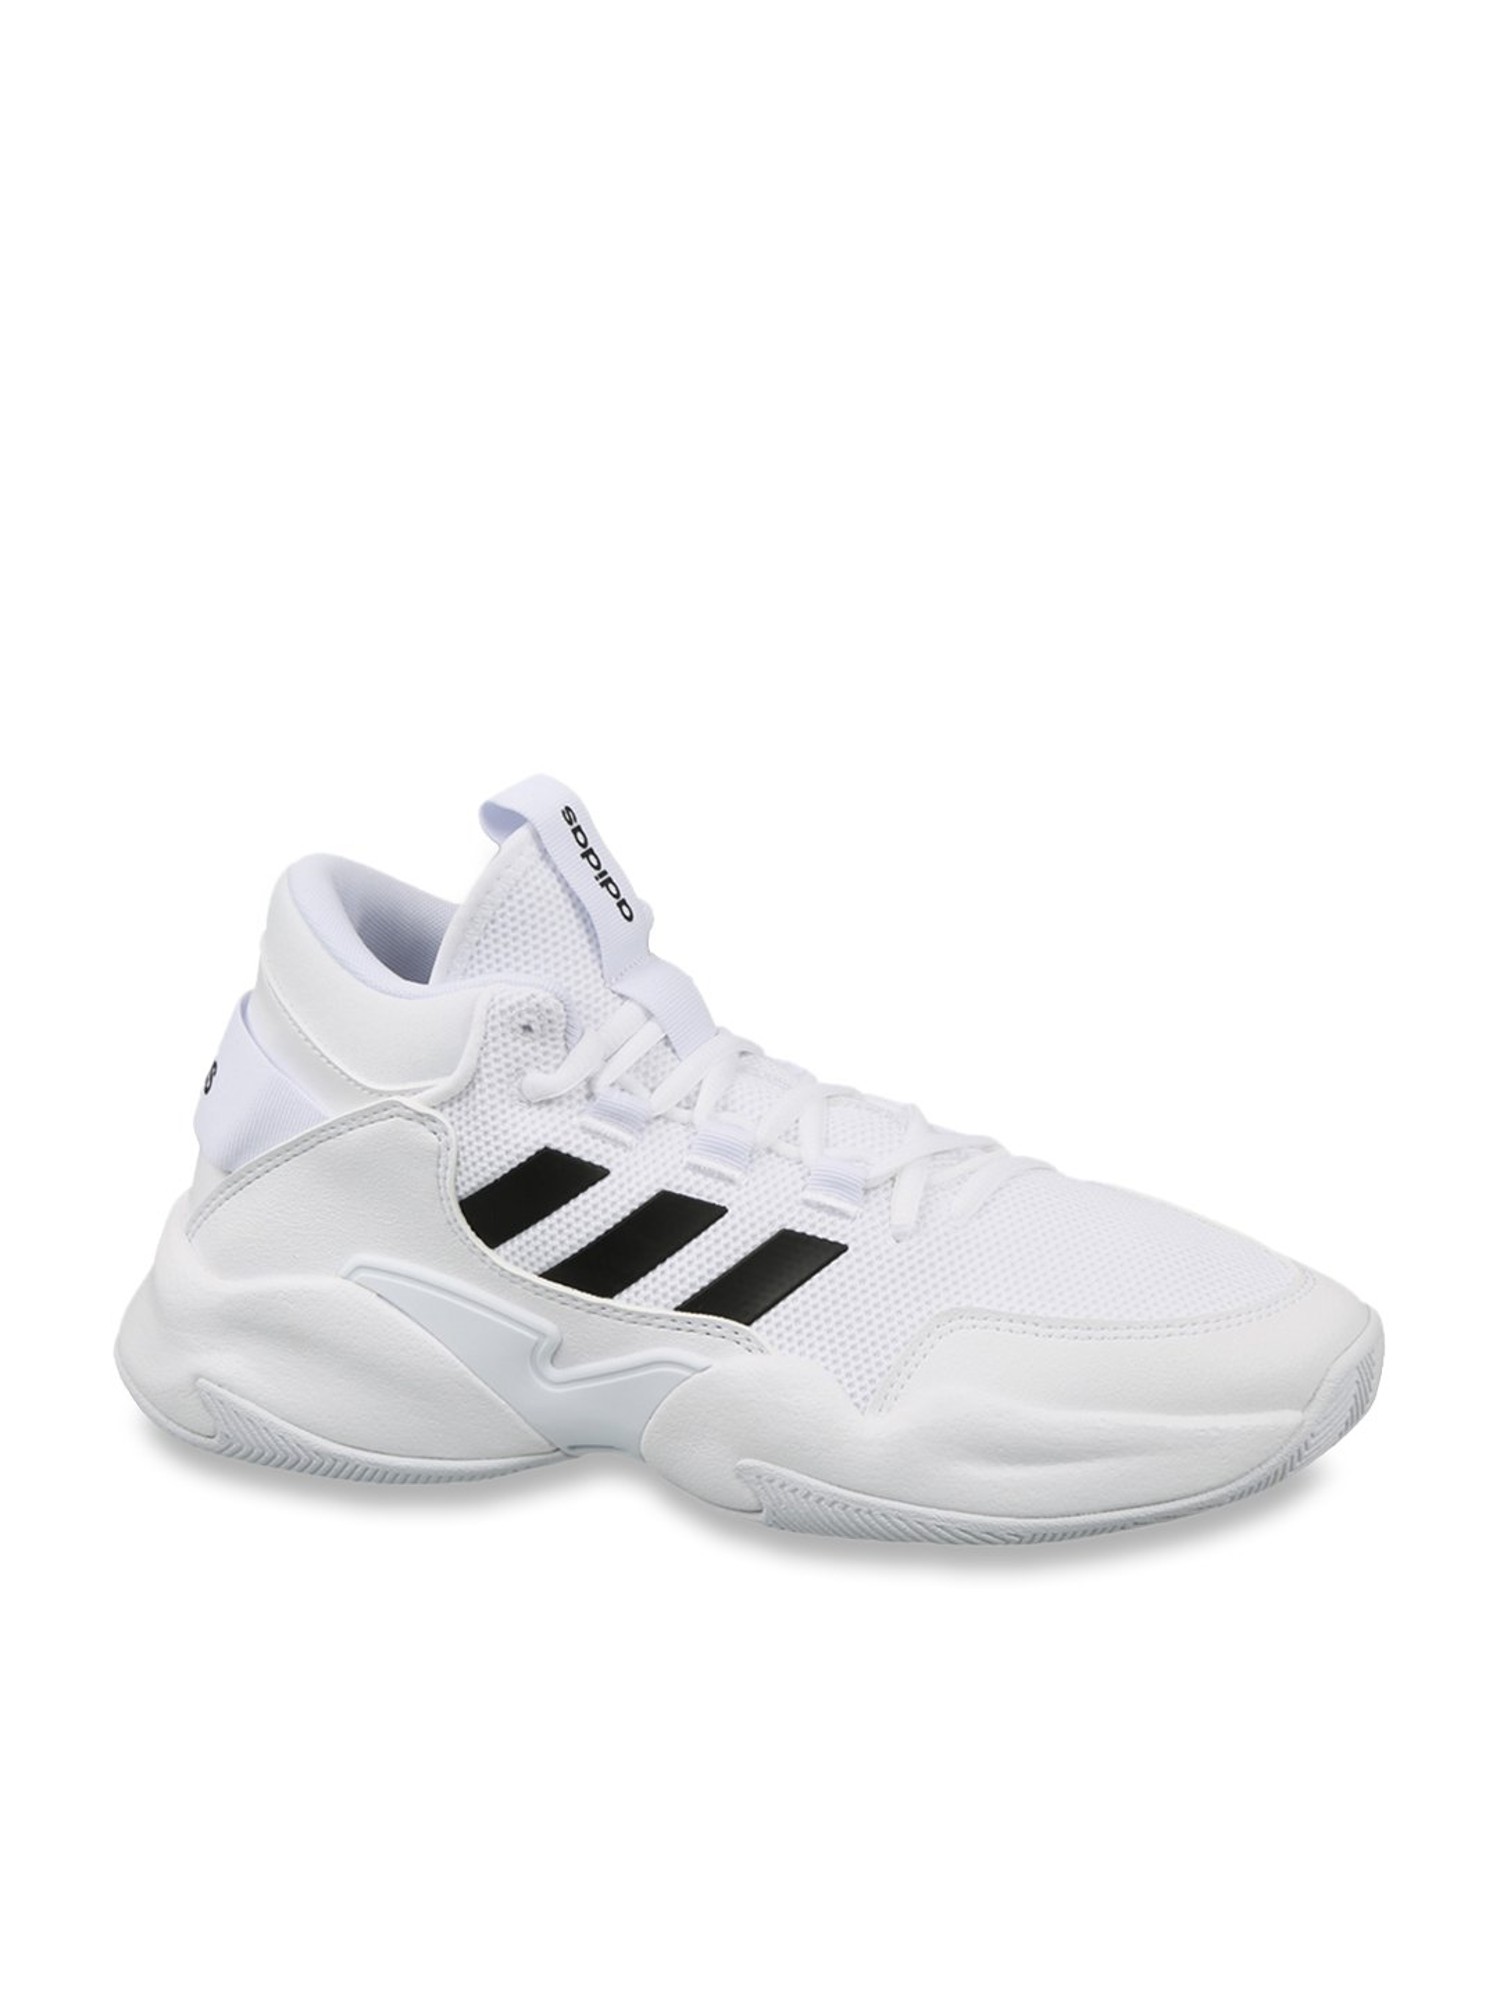 adidas street check basketball shoes